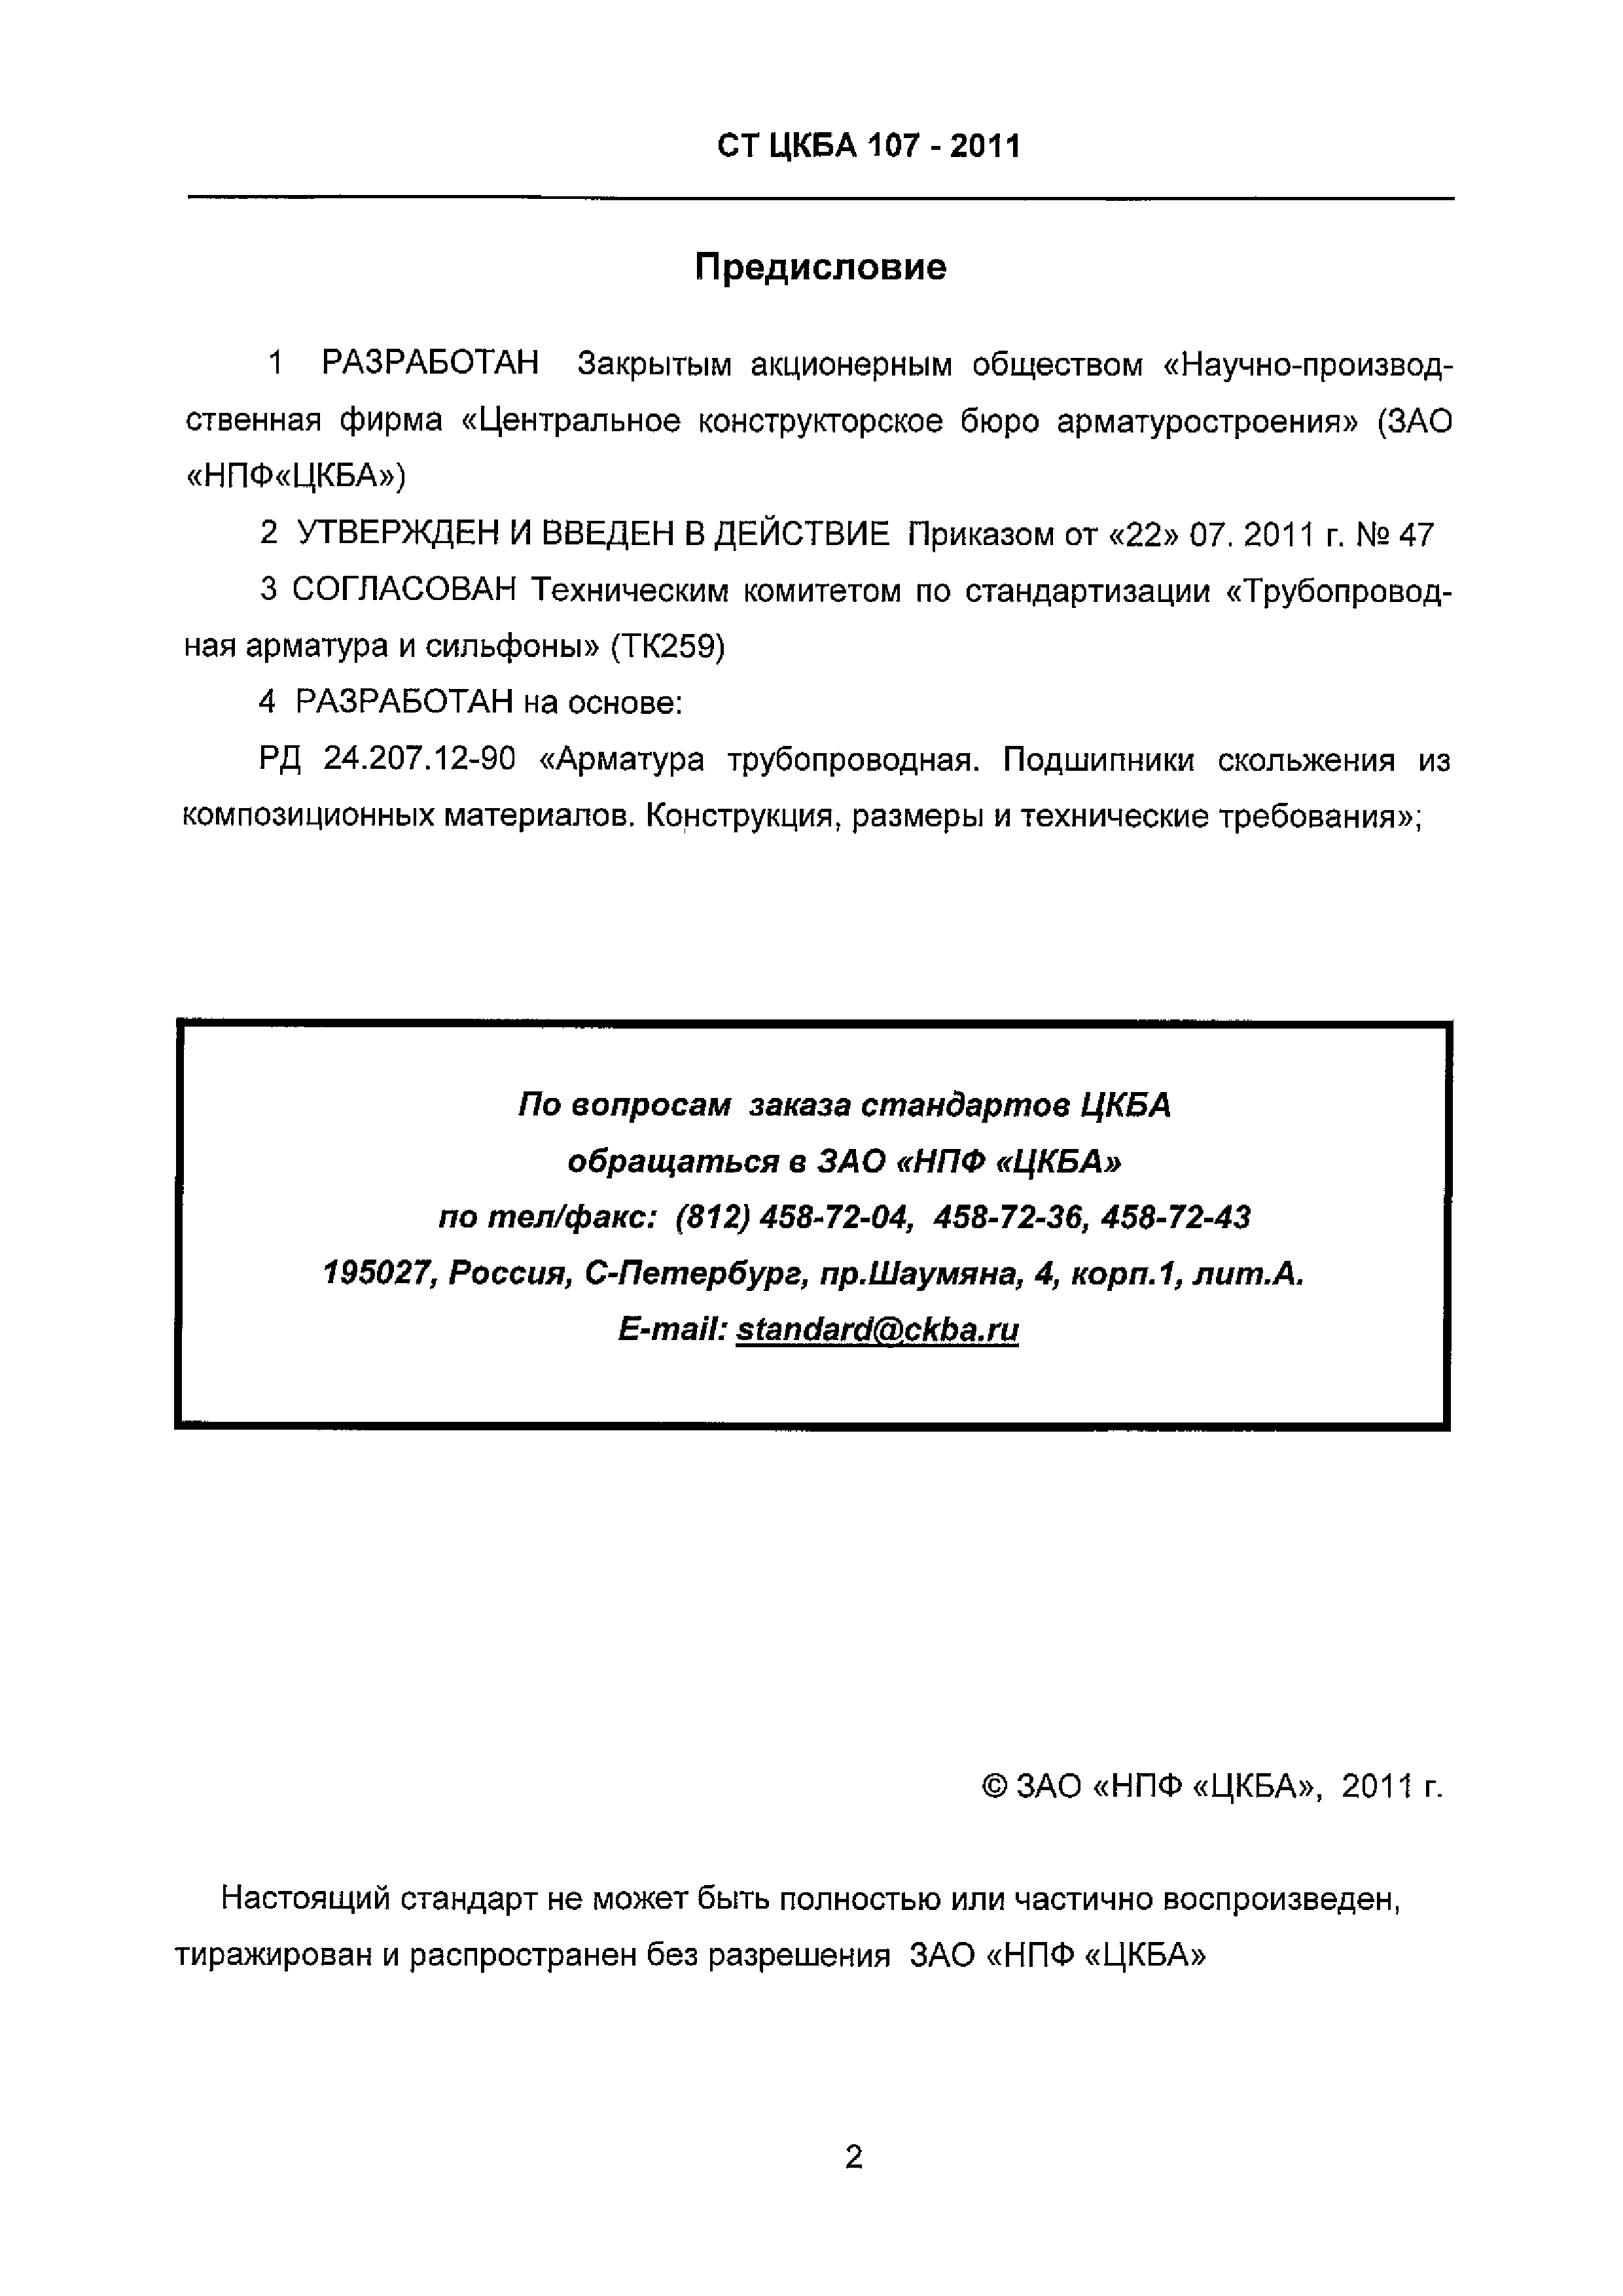 СТ ЦКБА 107-2011